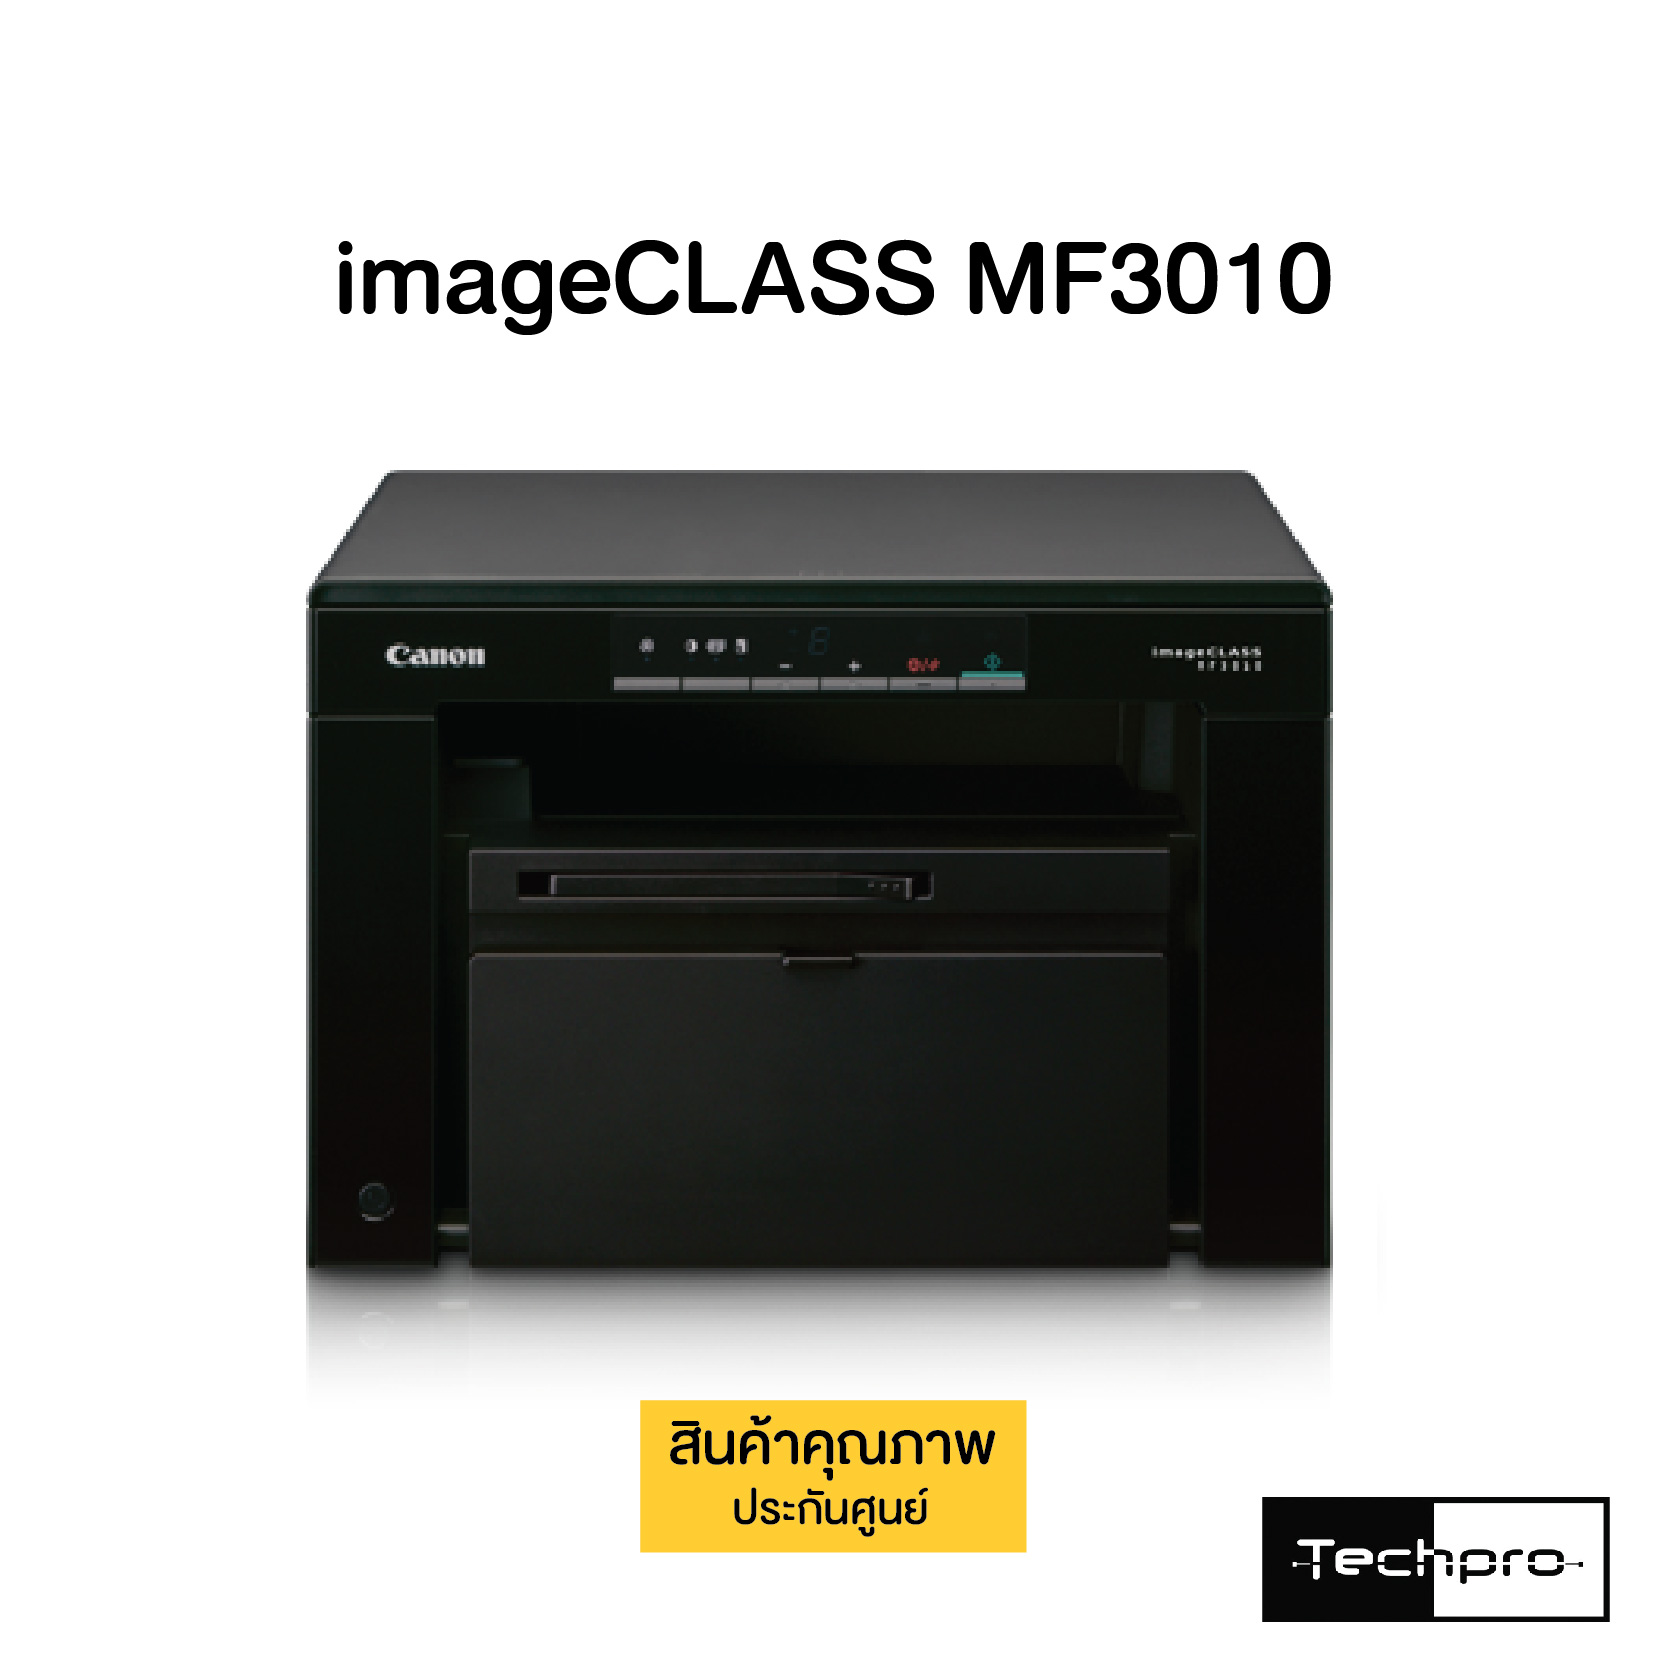 CANON imageCLASS MF3010 - Techpro